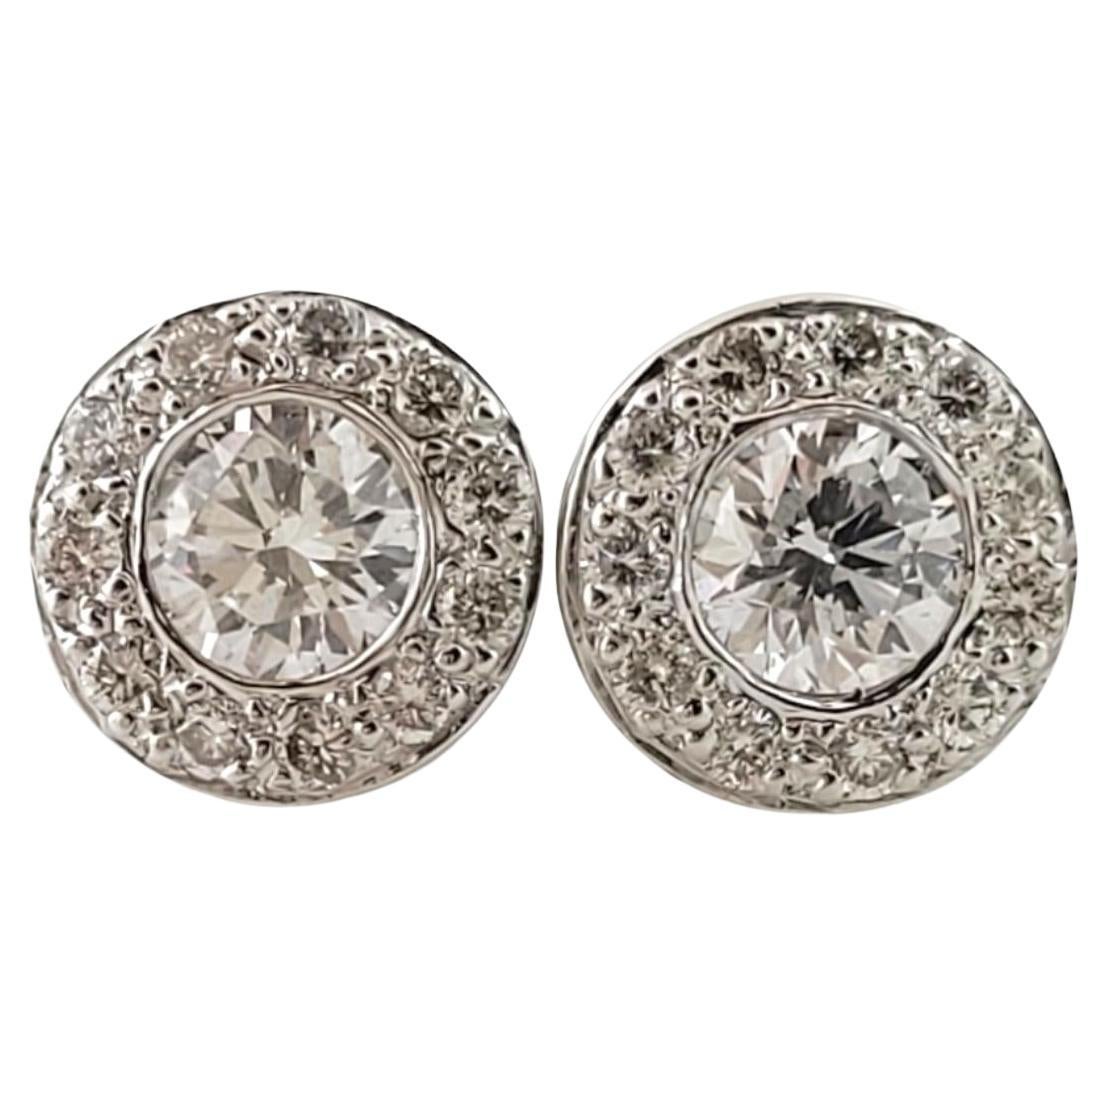 14 Karat White Gold Diamond Halo Earrings #15083